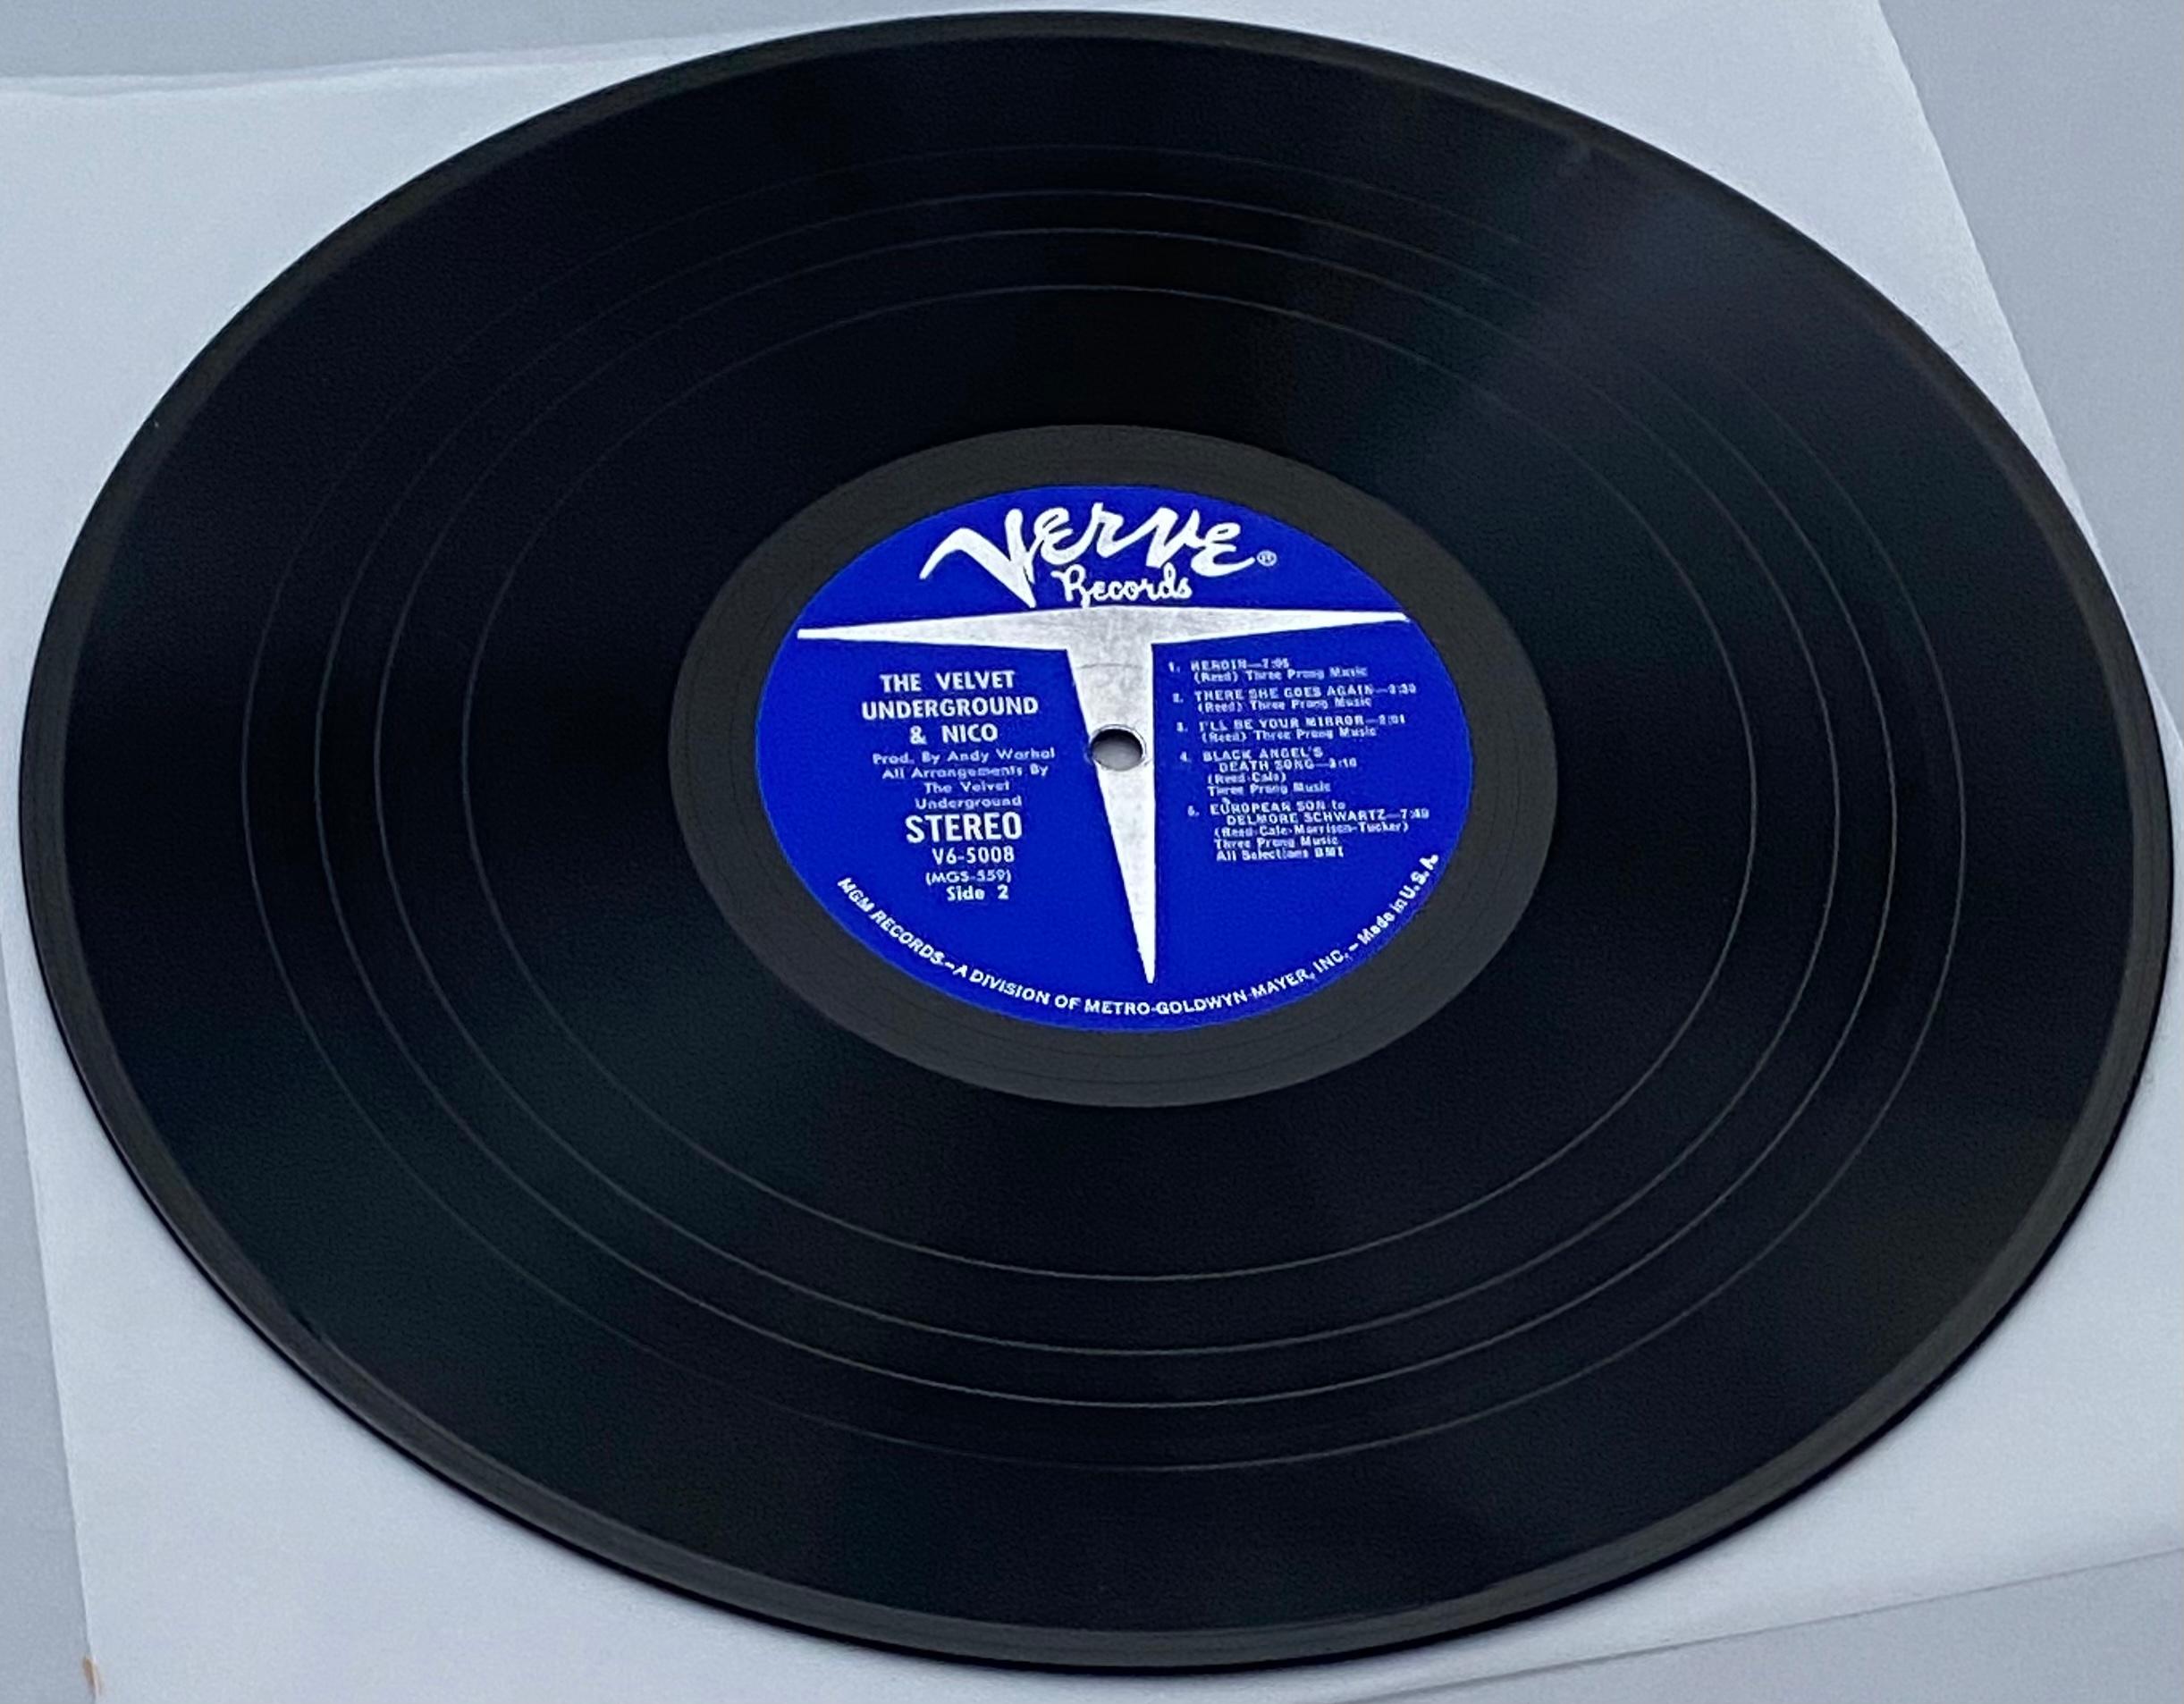 Andy Warhol Banana: Nico & The Velvet Underground vinyl record (1967 original)  4